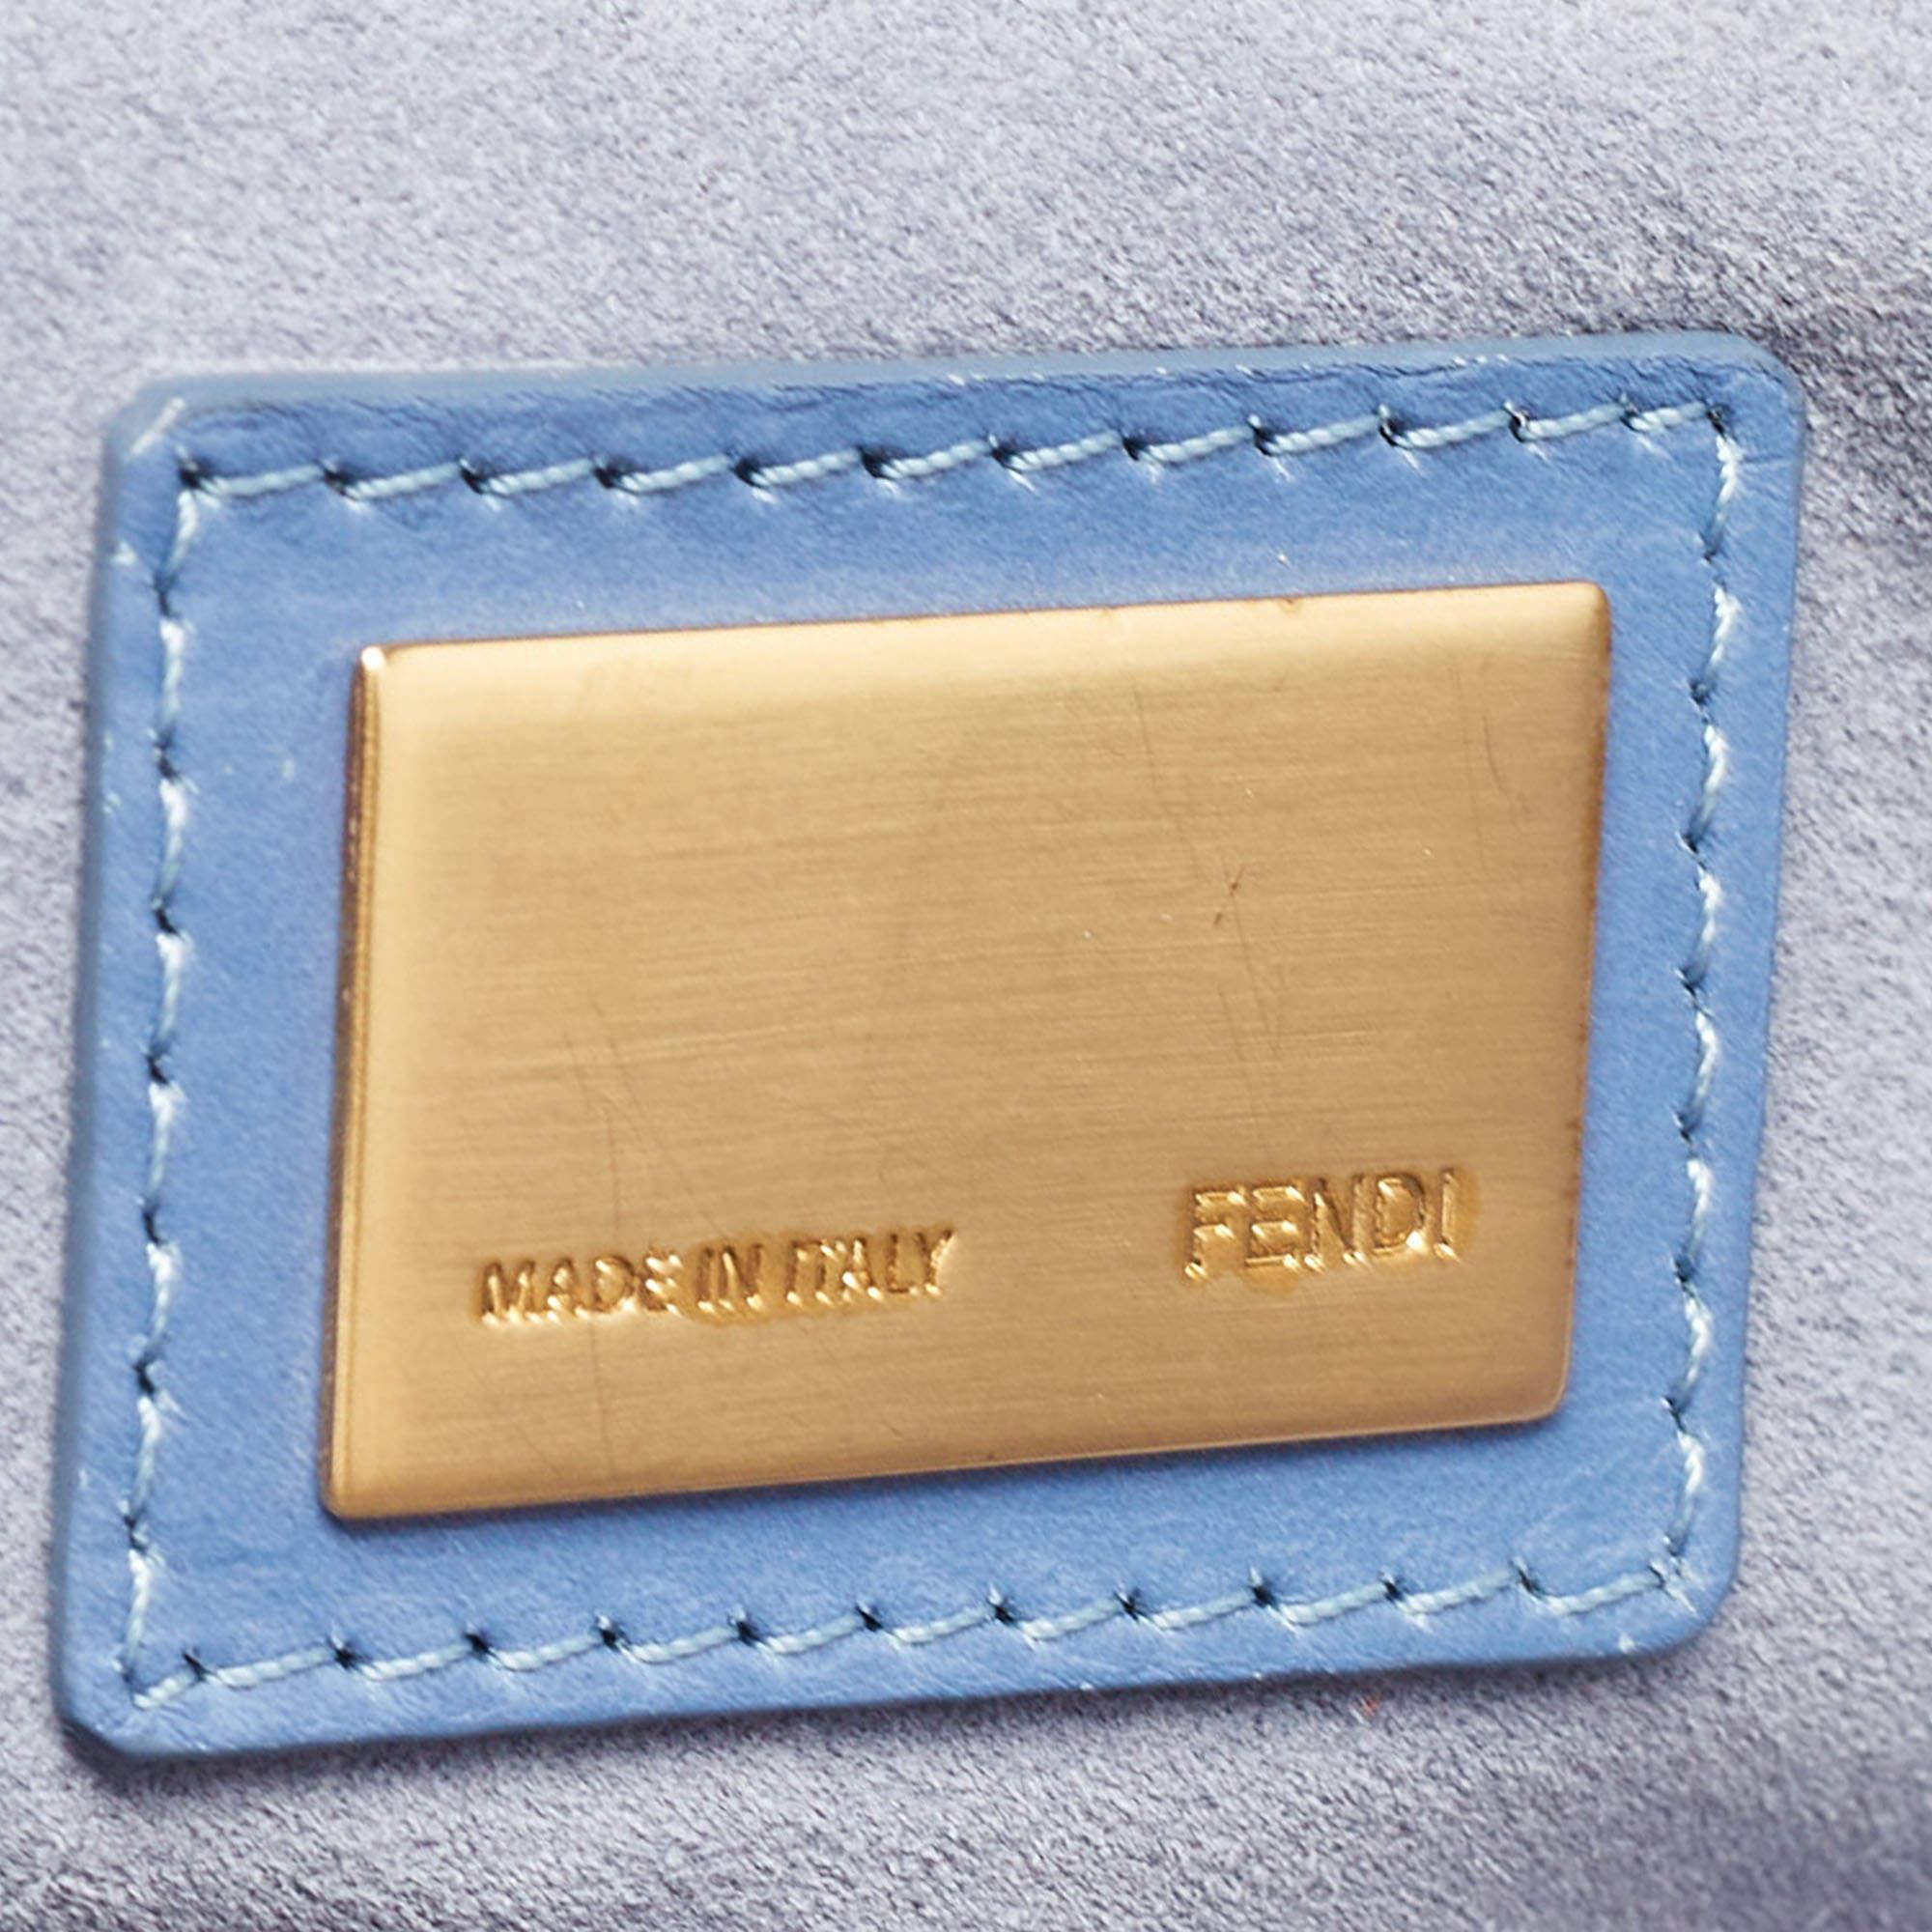 Fendi Blue Leather Large Peekaboo Top Handle Bag For Sale 8